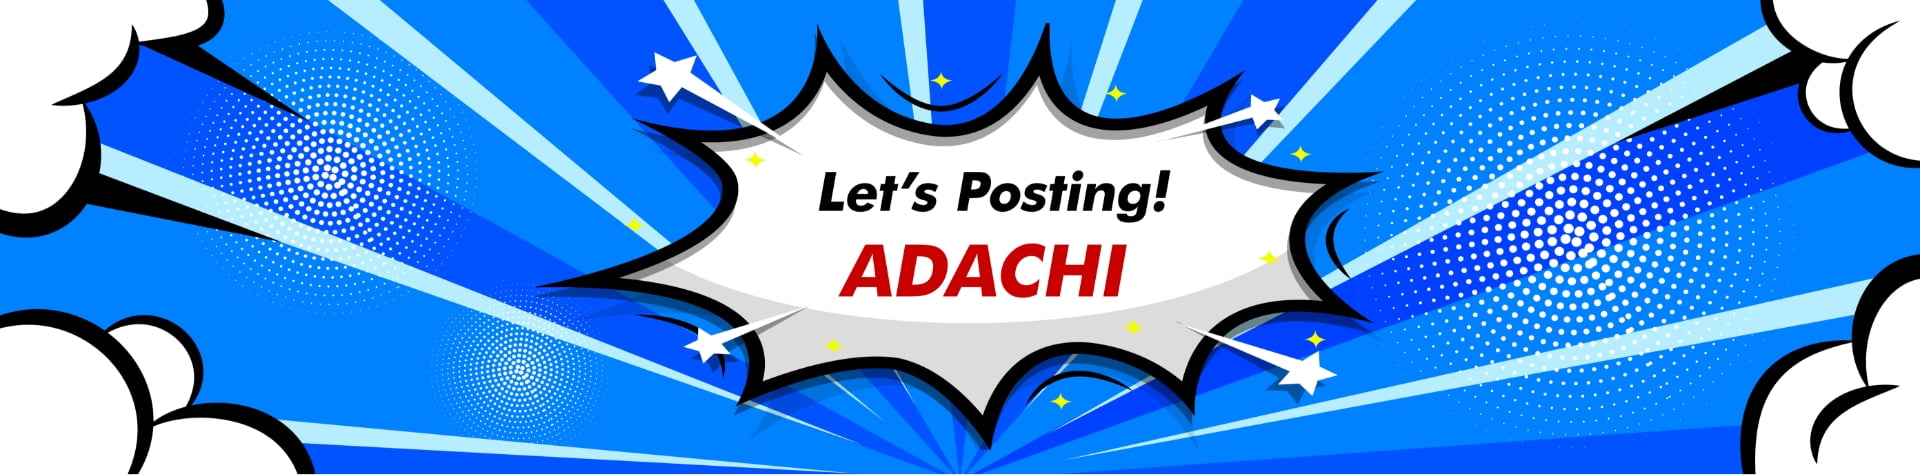 Let's Posting! -adachi-